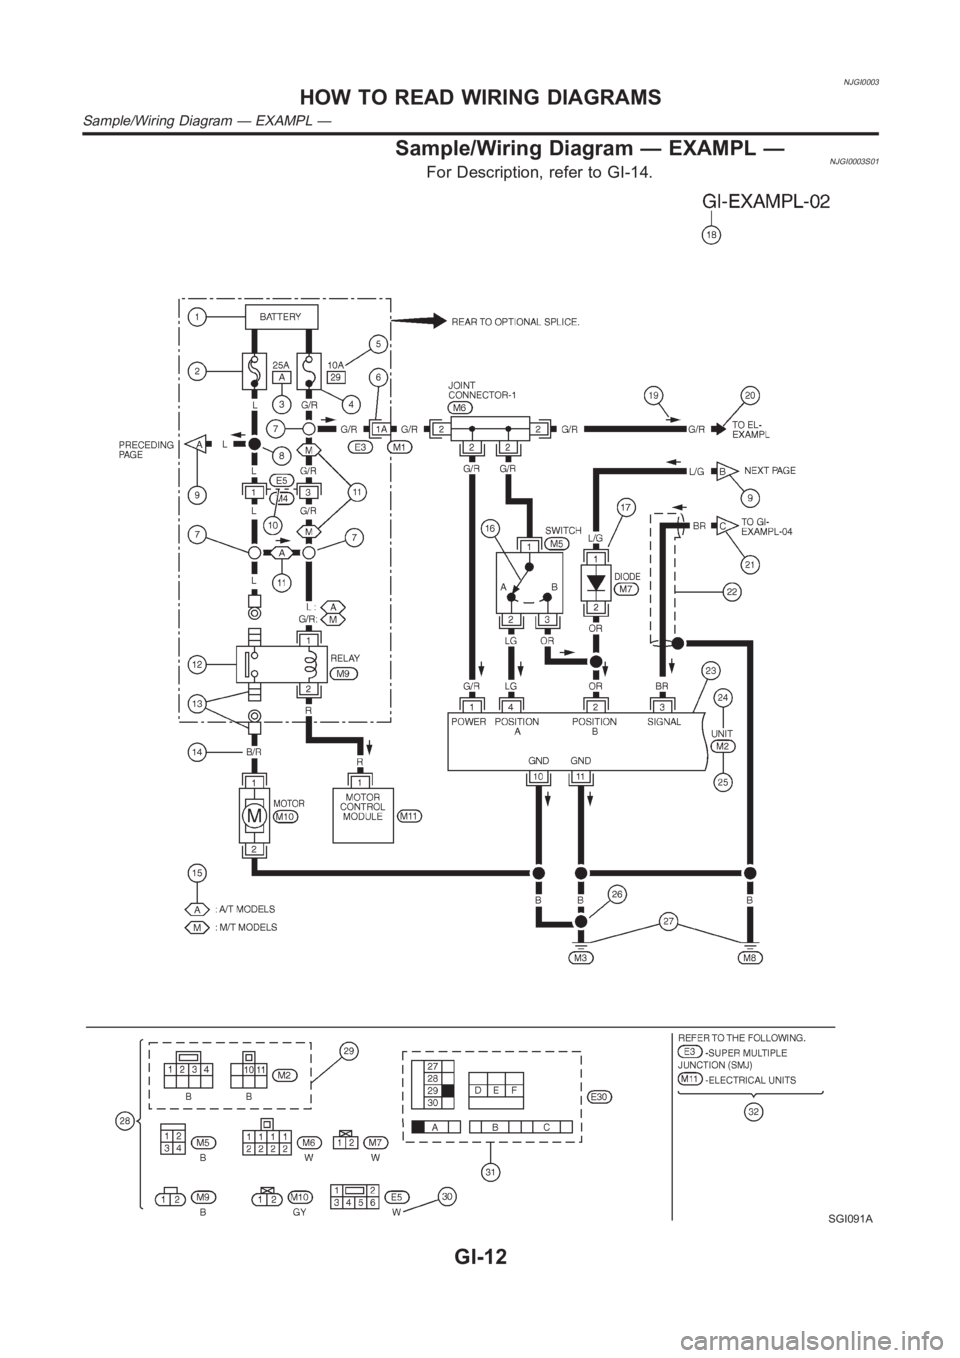 NISSAN ALMERA N16 2003  Electronic Repair Manual NJGI0003
Sample/Wiring Diagram — EXAMPL —NJGI0003S01For Description, refer to GI-14.
SGI091A
HOW TO READ WIRING DIAGRAMS
Sample/Wiring Diagram — EXAMPL —
GI-12 